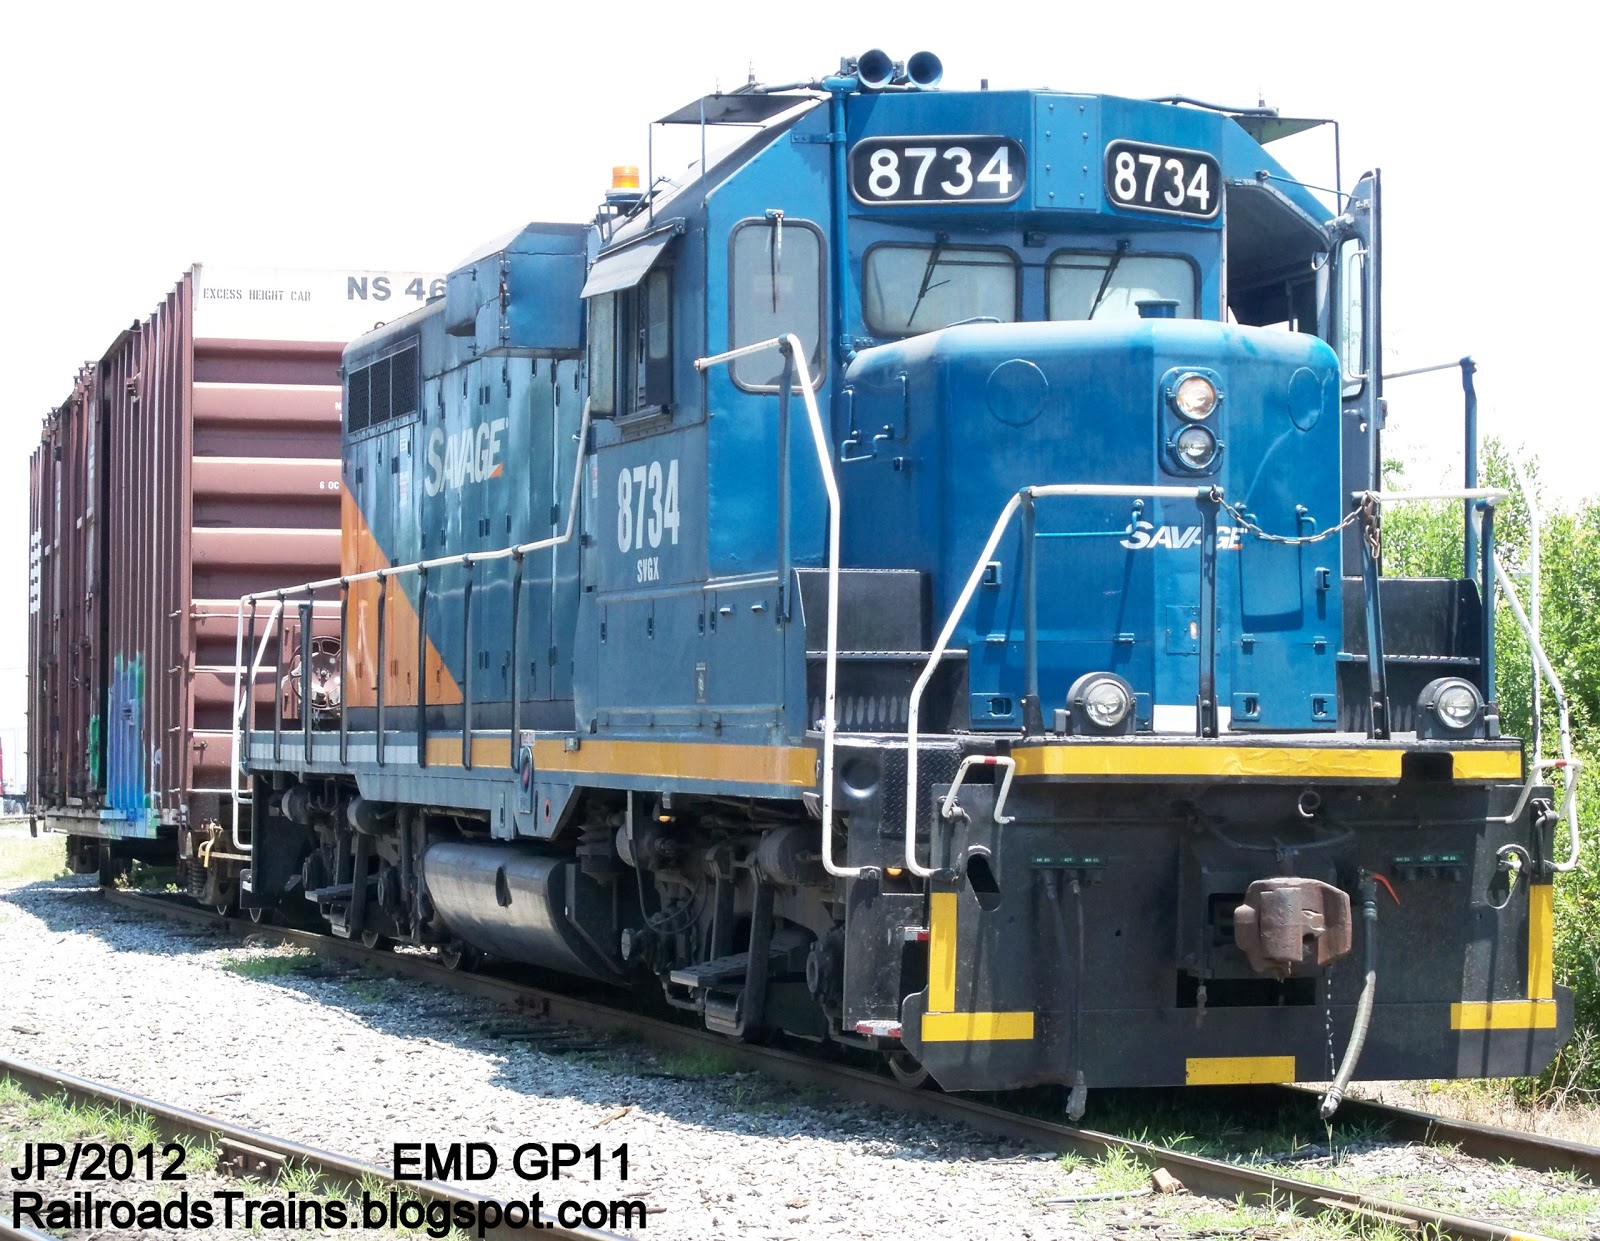 http://4.bp.blogspot.com/-_GmR3ujUtDQ/UAw0YzyVkOI/AAAAAAAFdTY/lOyxkHpjO2k/s1600/SVGX+8734+GP11+EMD+Locomotive+Train+Engine+Nose+Savage+Rail+Canac+Railway+Services+Macon+Georgia+Mead+Paper+Mill+Packaging+Plant+Ex+ICG.JPG